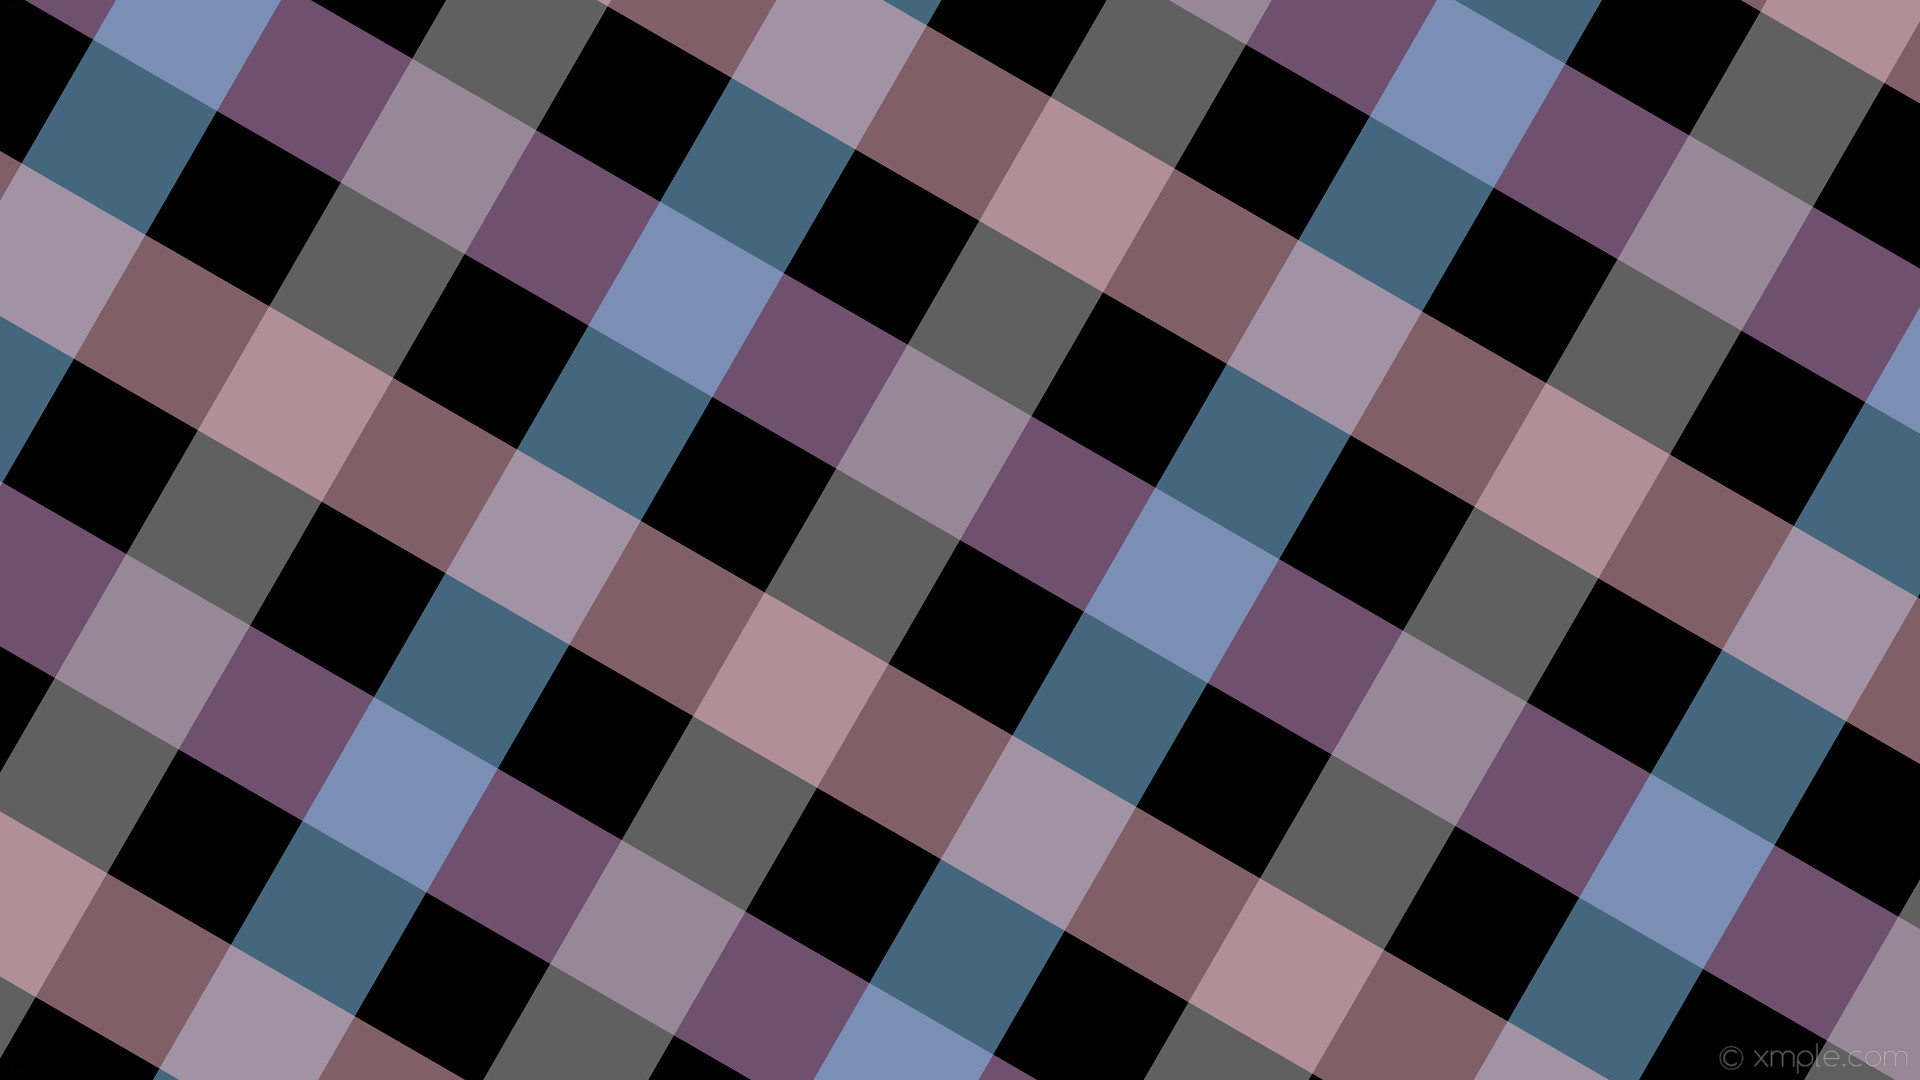 1920x1080 wallpaper purple blue pink striped penta gingham black grey plum silver  light sky blue #000000